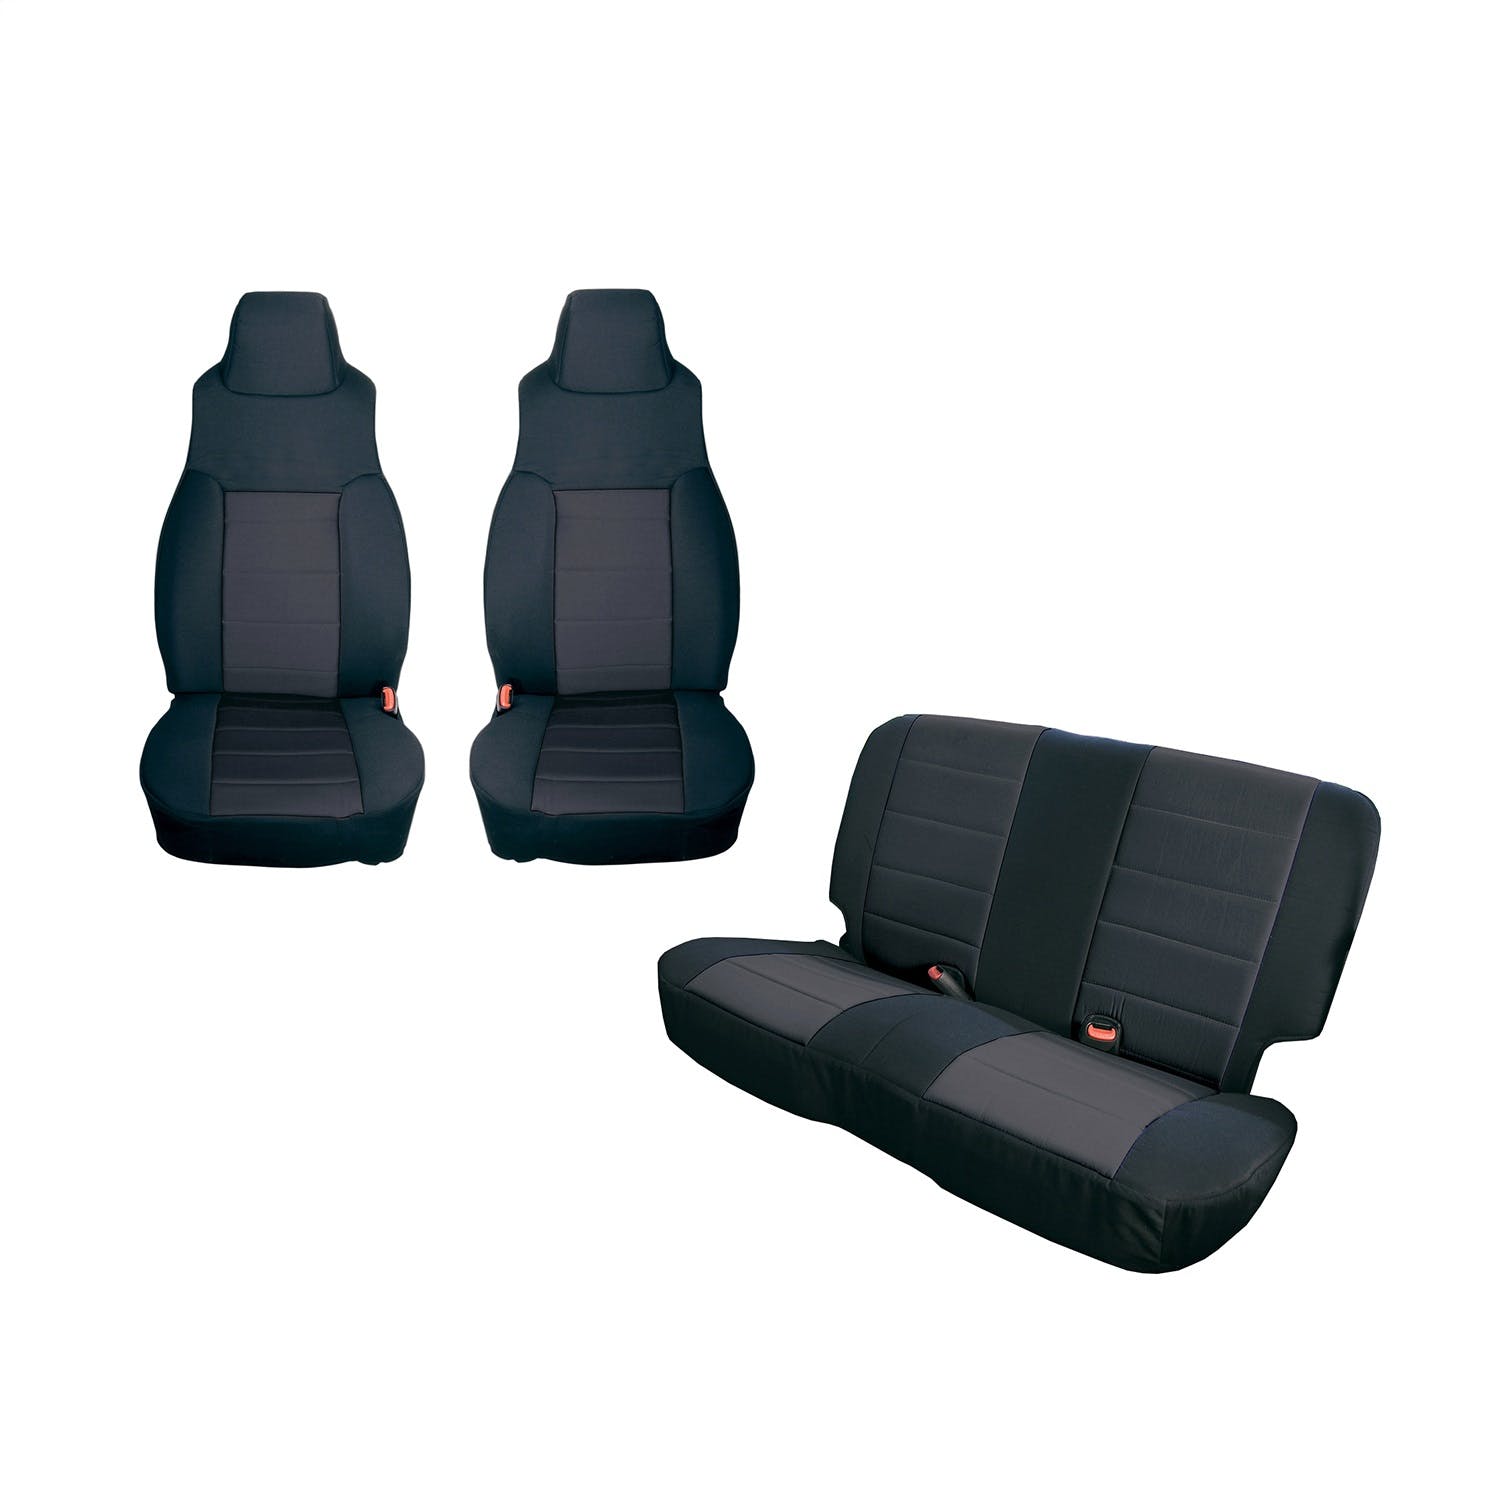 Rugged Ridge 13293.01 Seat Cover Kit, Black